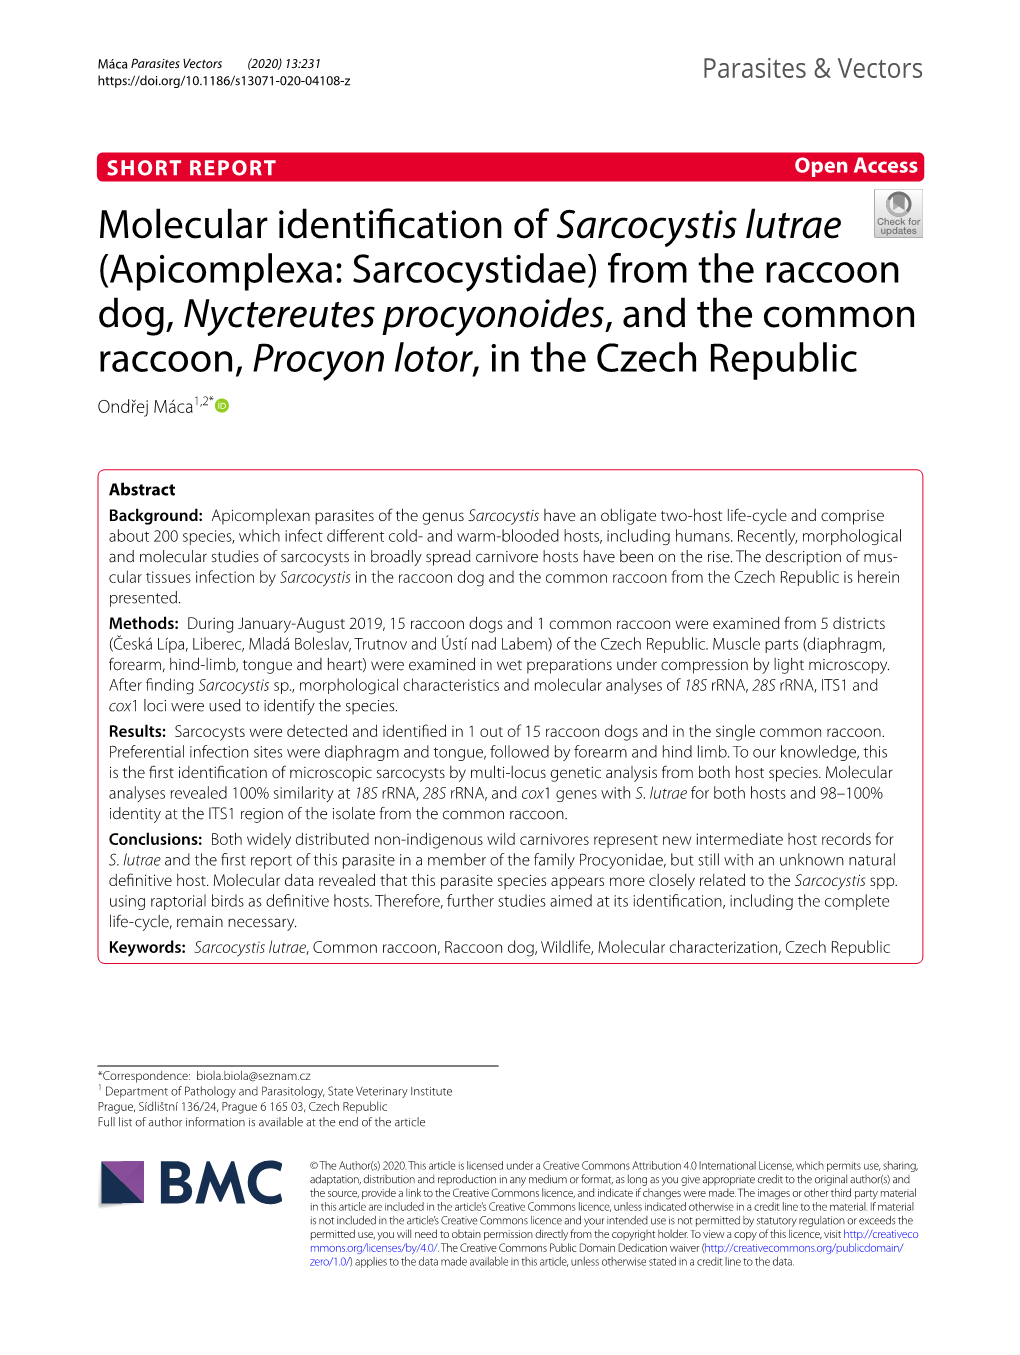 Molecular Identification of Sarcocystis Lutrae